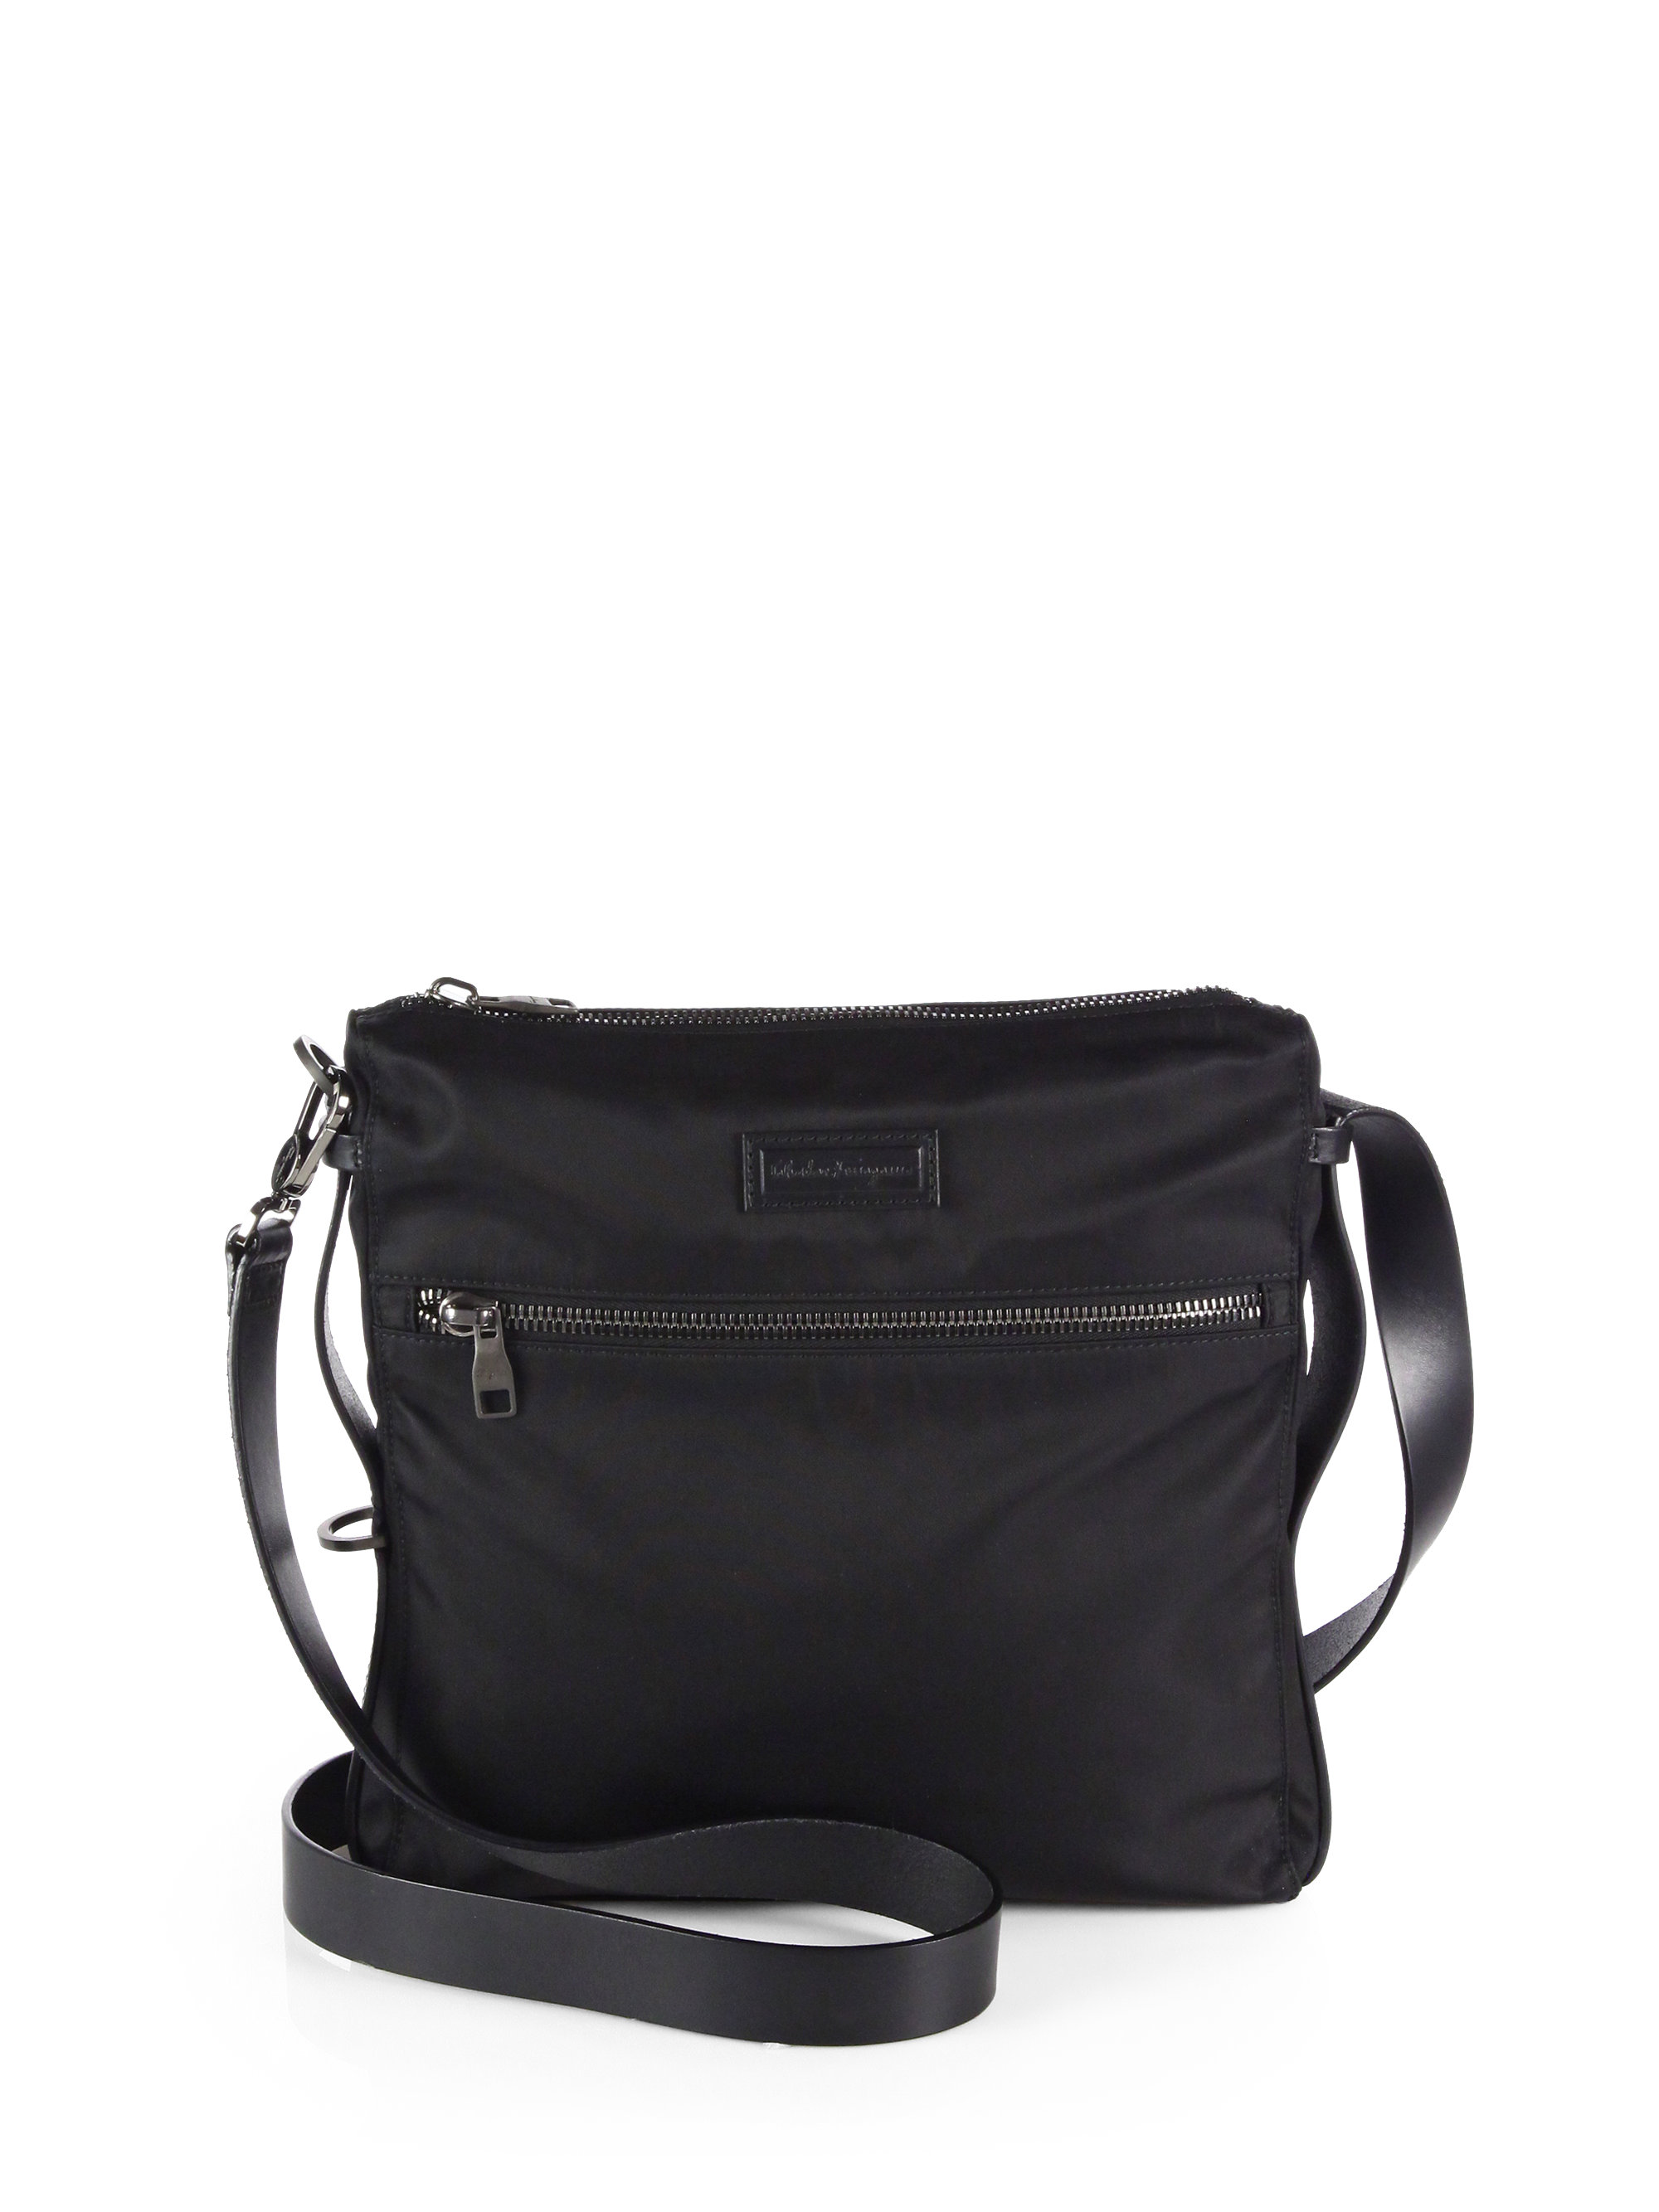 Ferragamo Sydney Nylon Crossbody Bag in Black for Men - Lyst